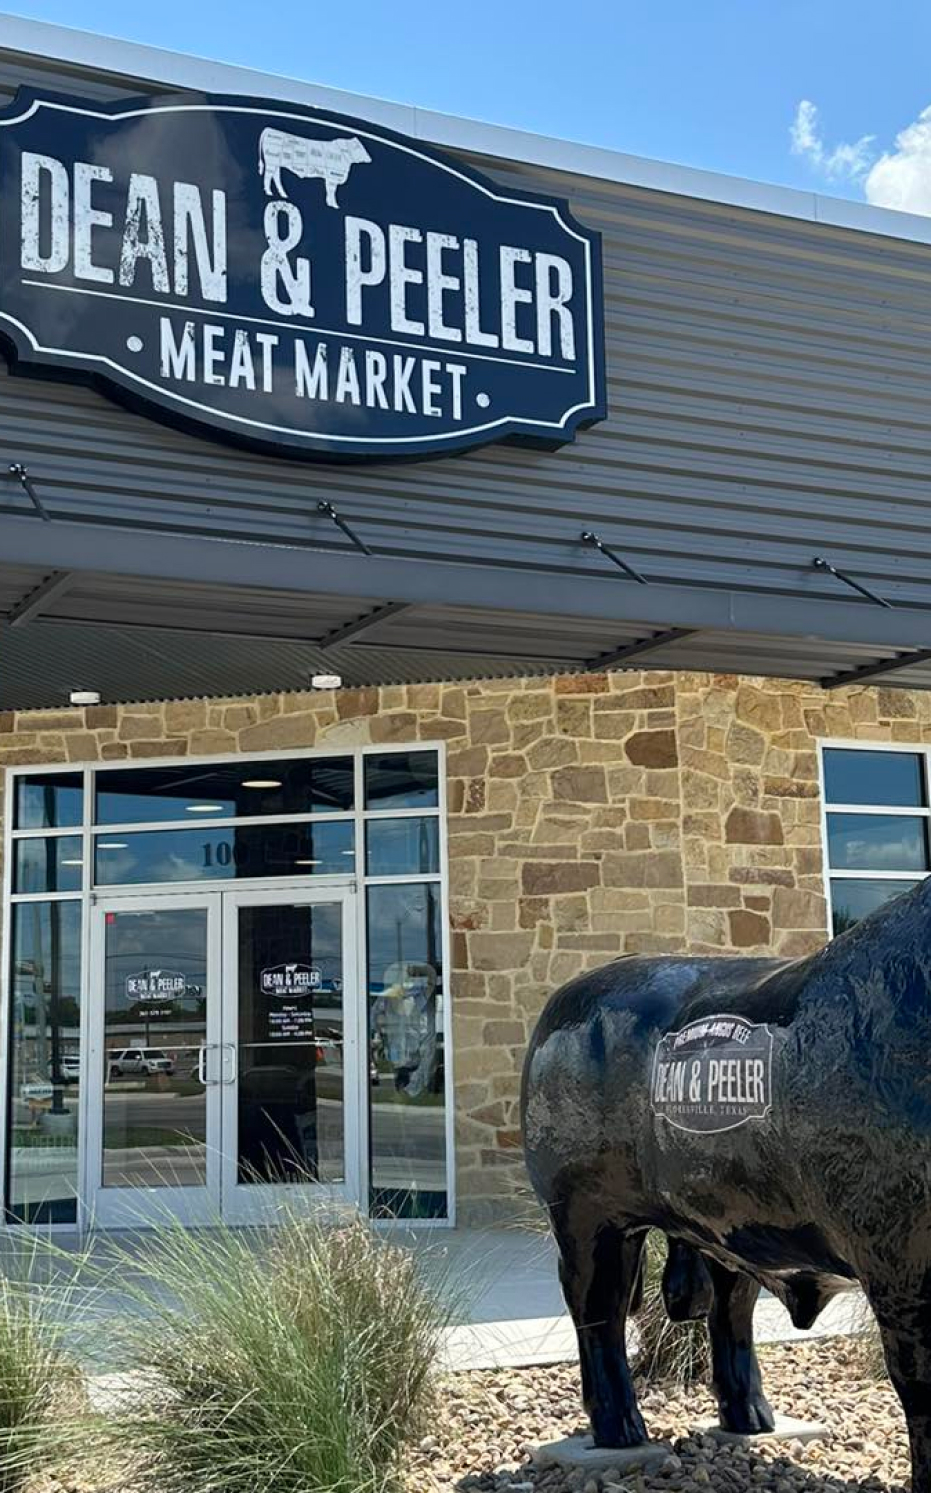 The Dean & Peeler Meat Market sign